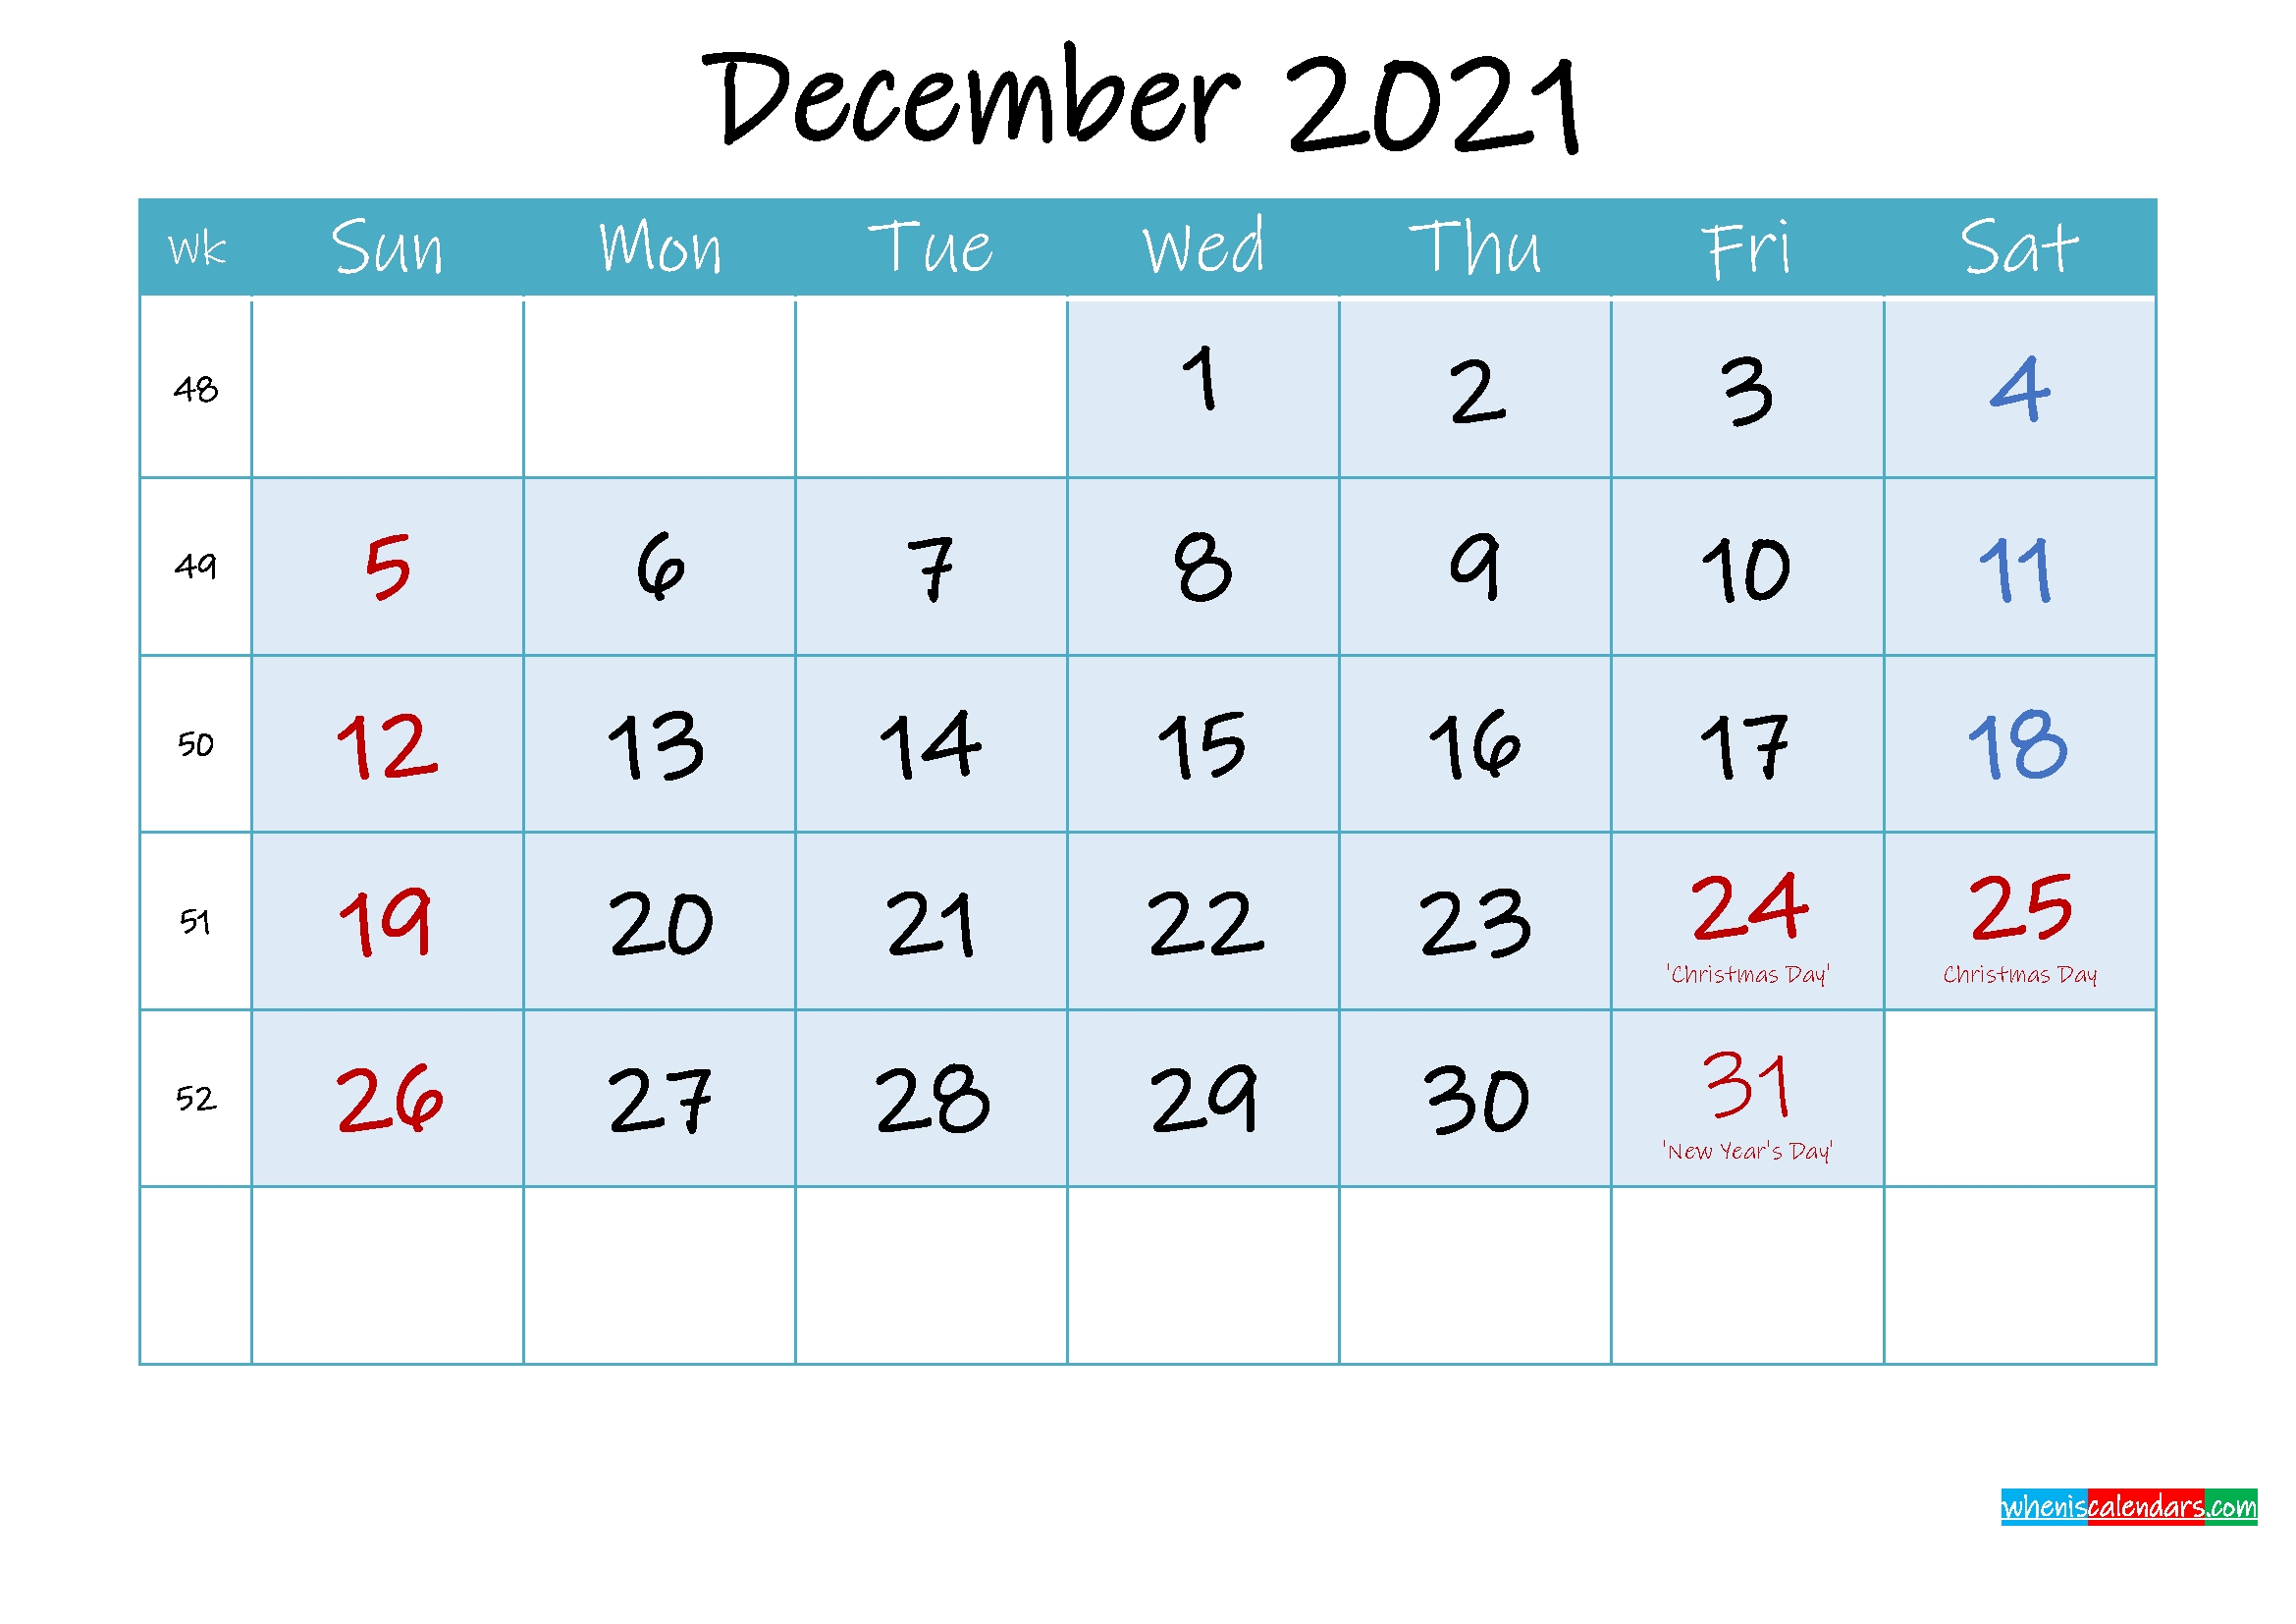 December 2021 Free Printable Calendar With Holidays - Template Ink21M156 December 2021 Calendar With Holidays Printable